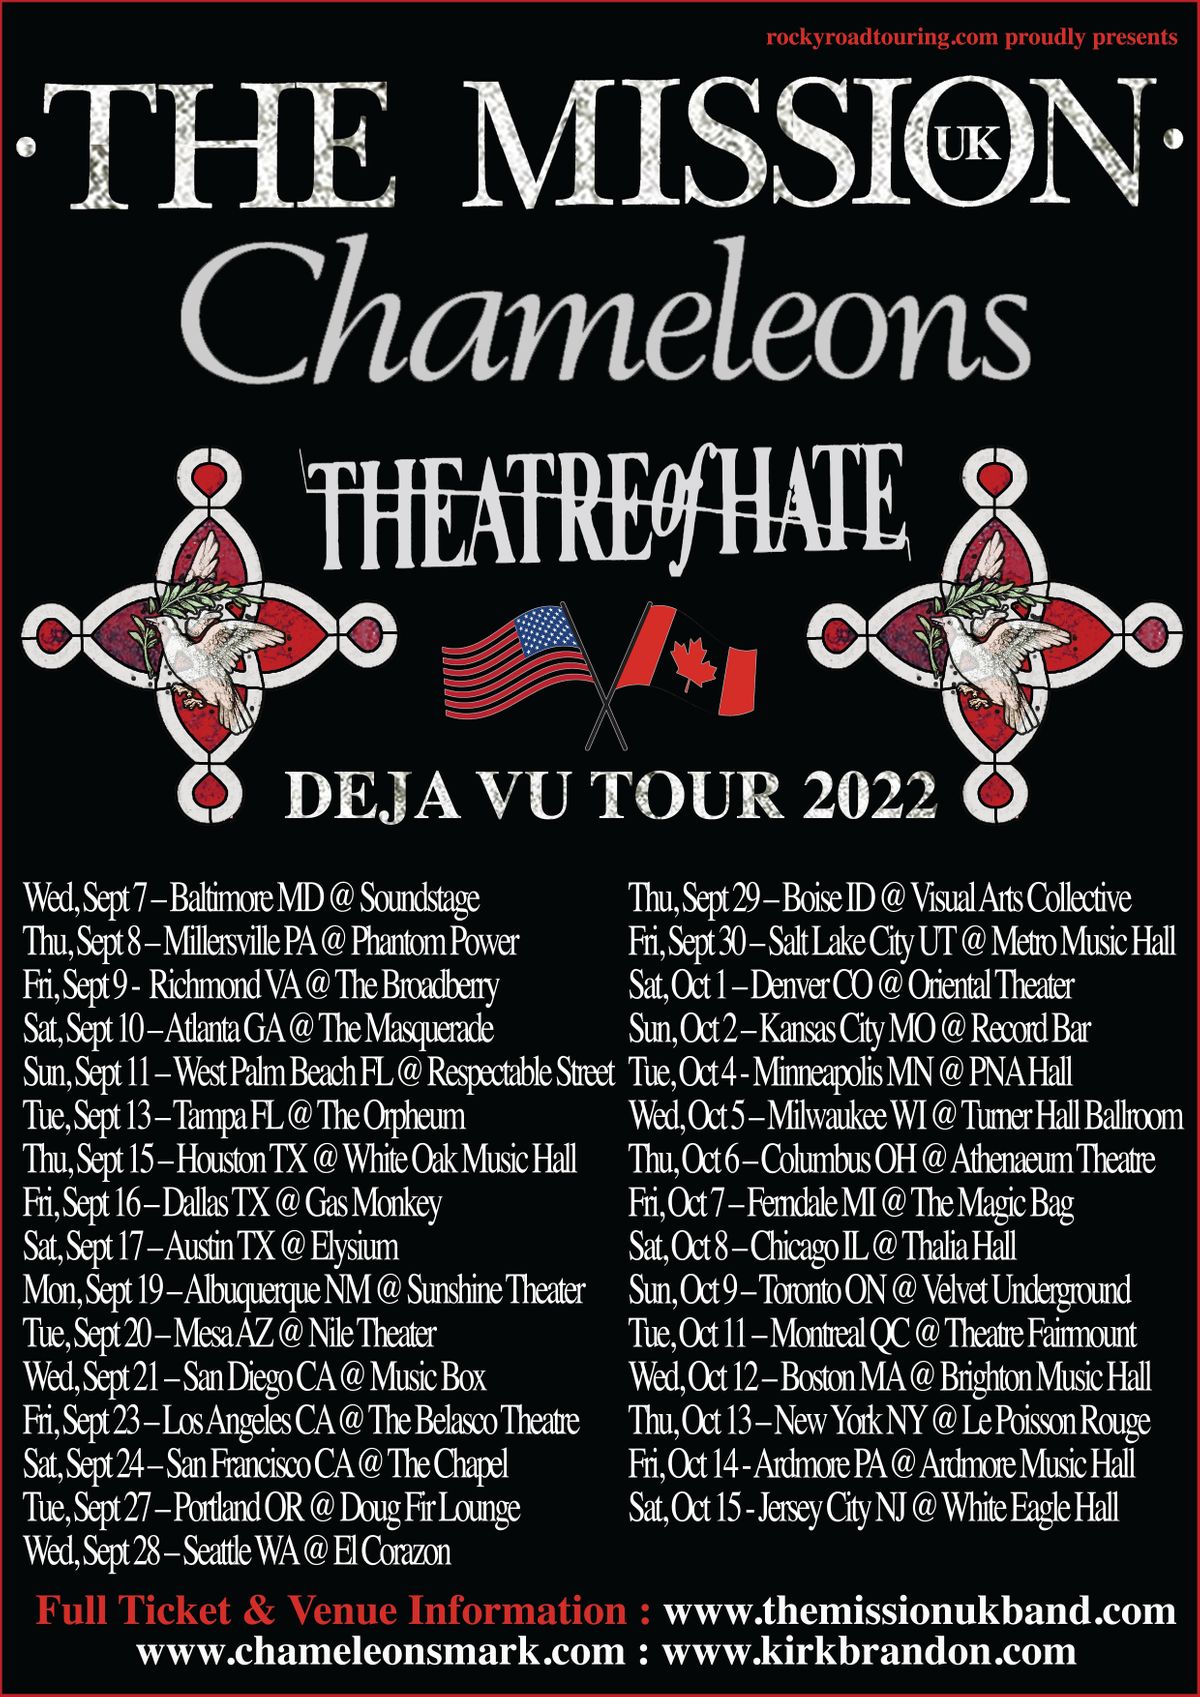 The Mission (UK) Chameleons Theatre of Hate Deja Vu Tour 2022